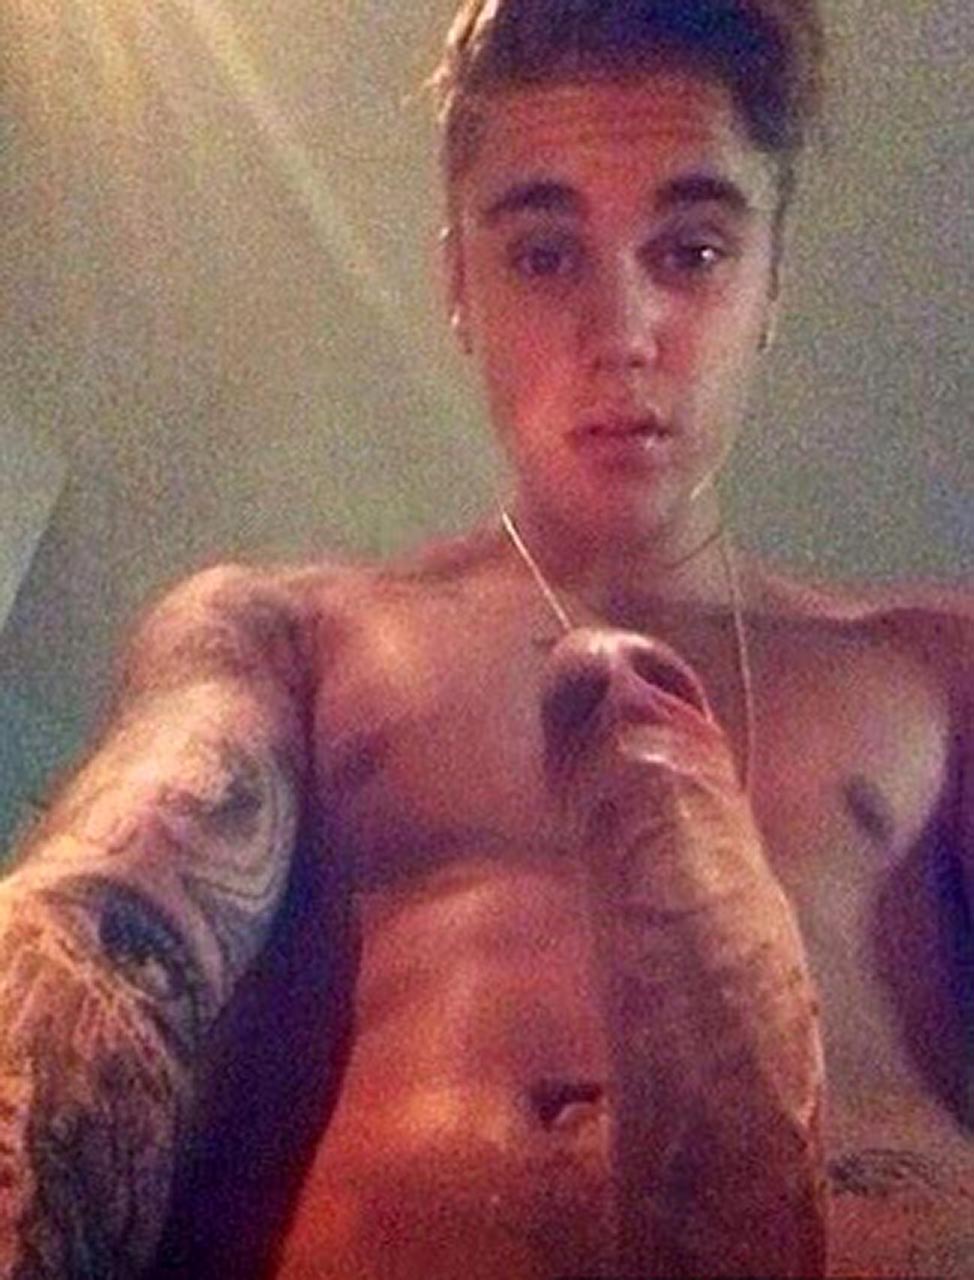 Justin Bieber Leaked Sex Tape